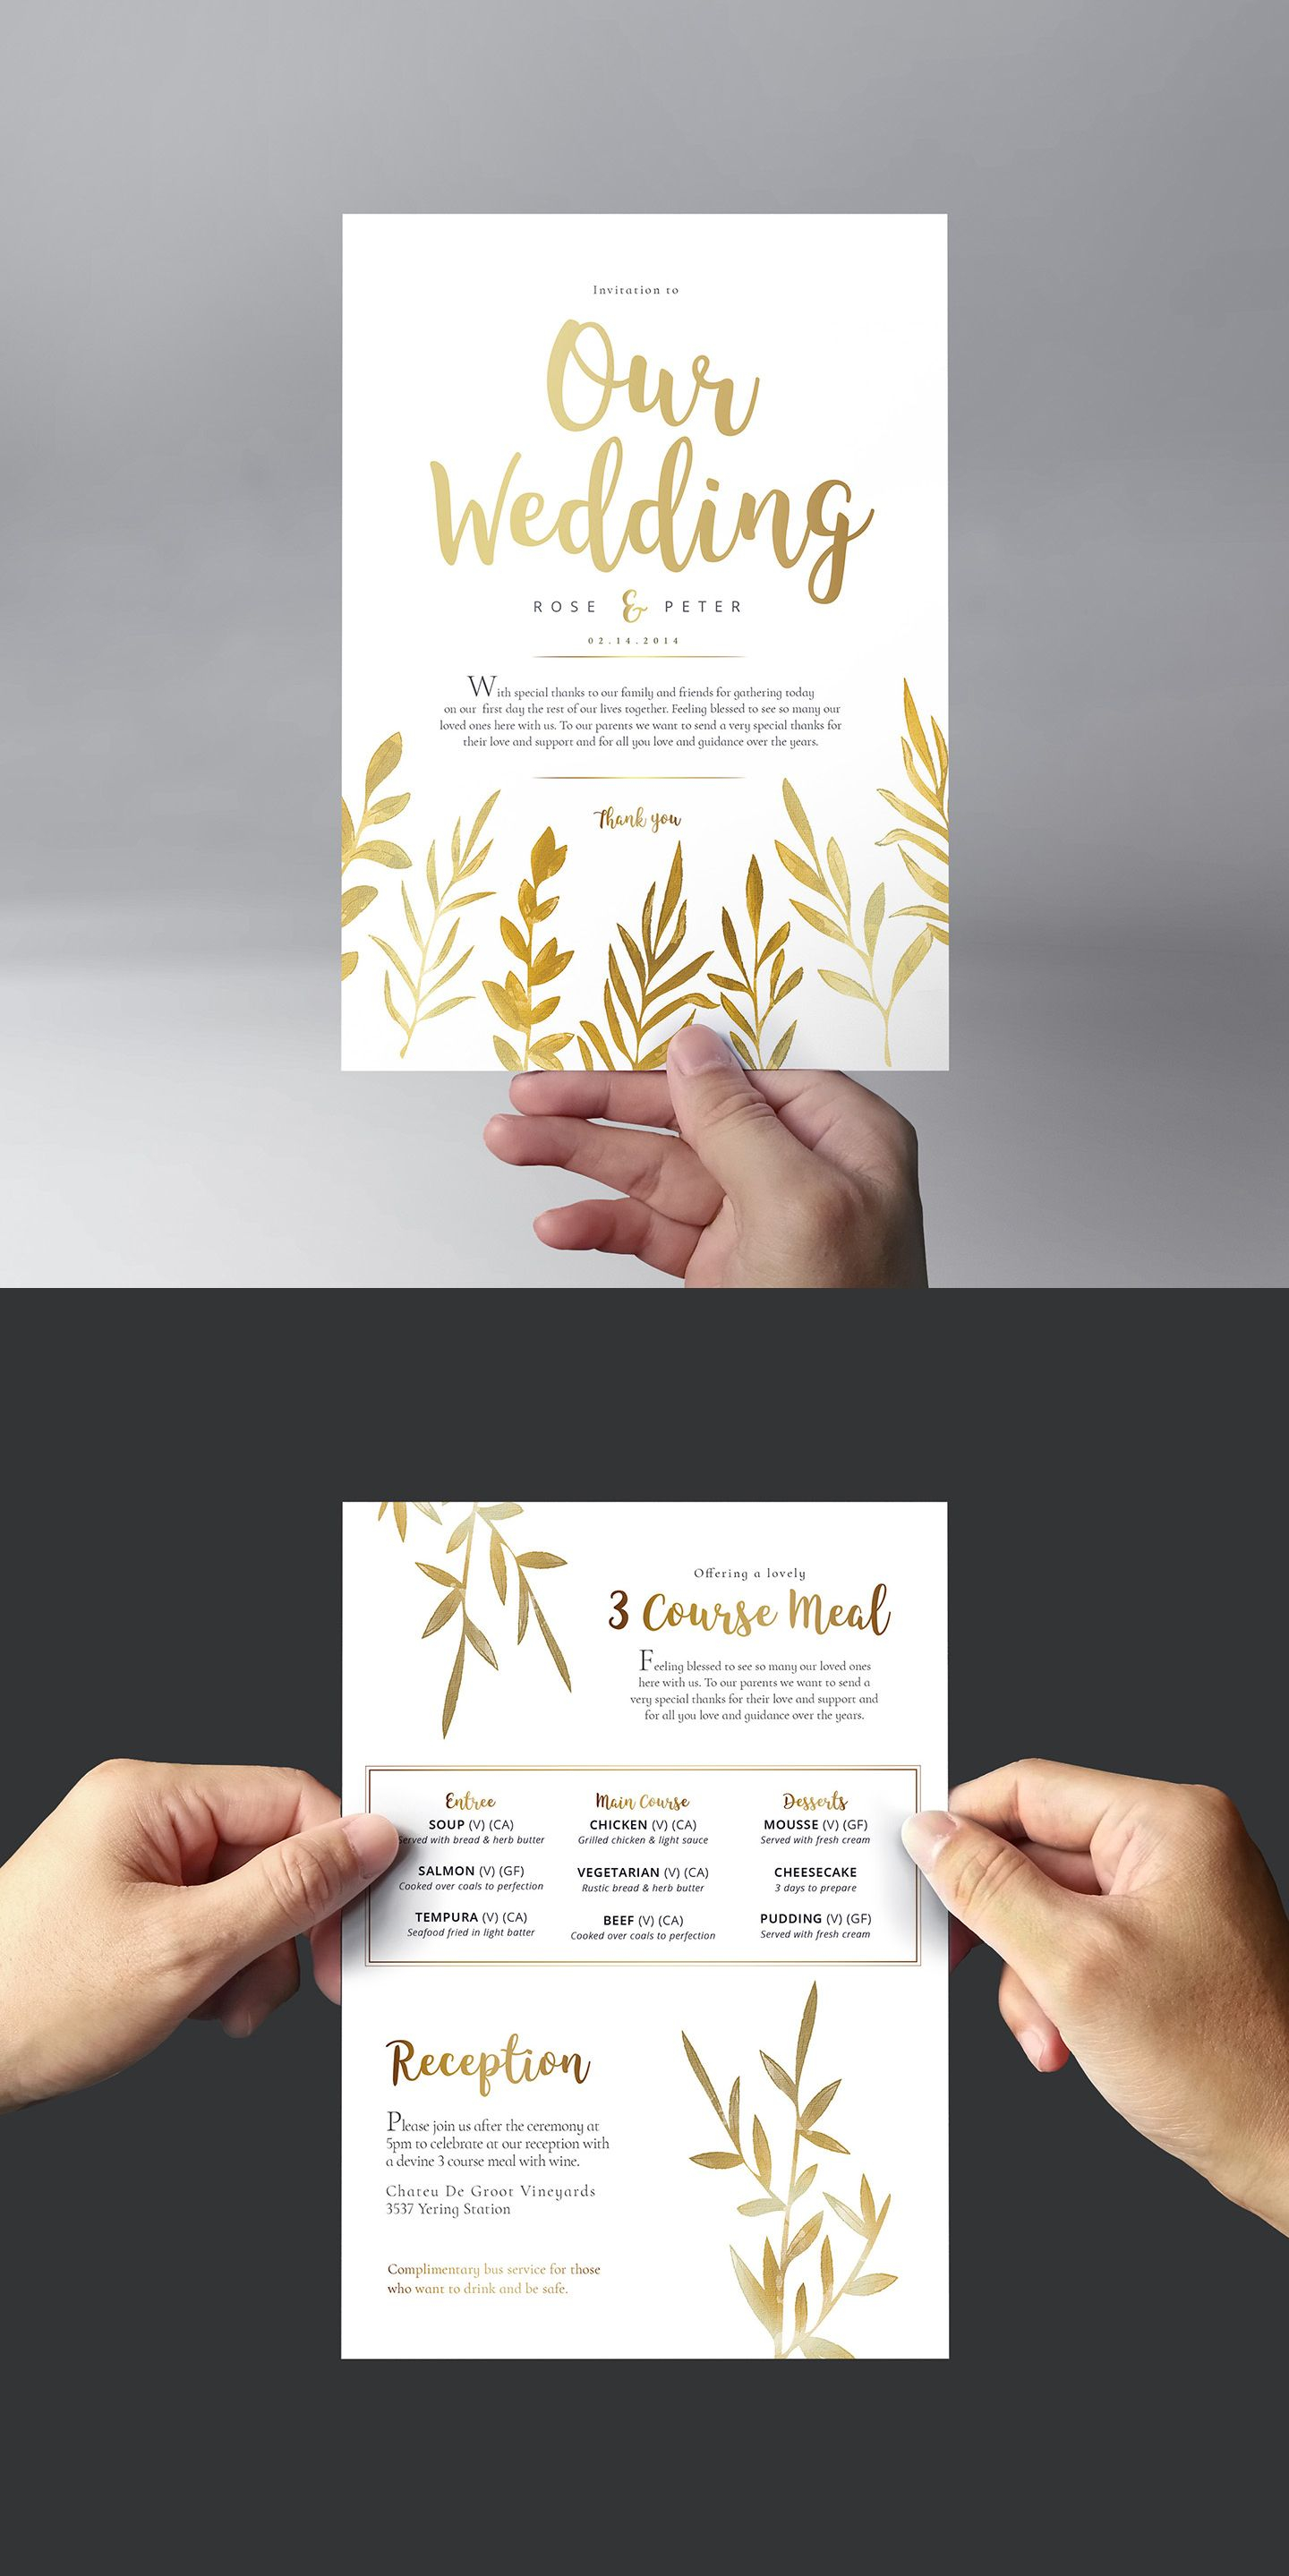 36 Create Your Own Adobe Illustrator Wedding Invitation Template in dimensions 1440 X 2878